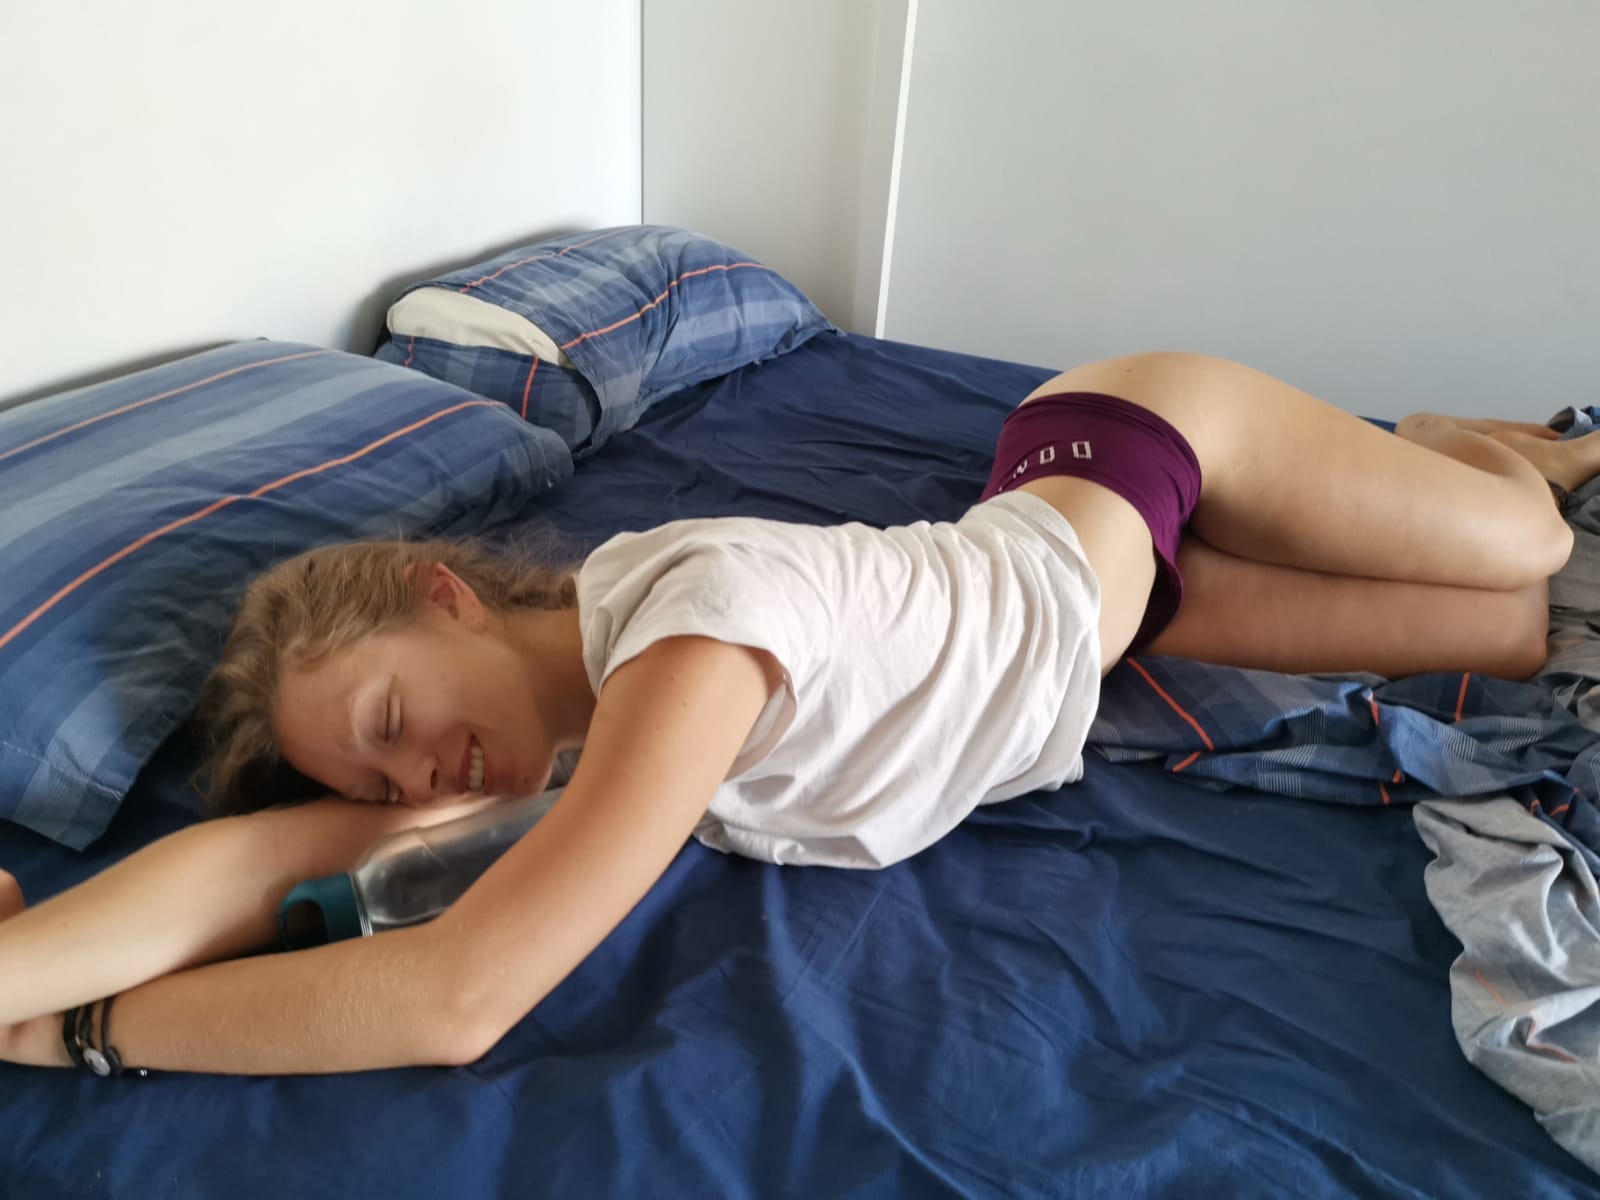 Eva Veil on X: My underwear says Don't wake me 😉 #pornstars #pornstar  #yeeesyeeesyeees #pornhub #youporn #porn #blonde #sex #sexy #stretching  #undies #whitetshirt #chaturbate #ass #booty #sleepsex  t.coYkSCu4R8rm  X